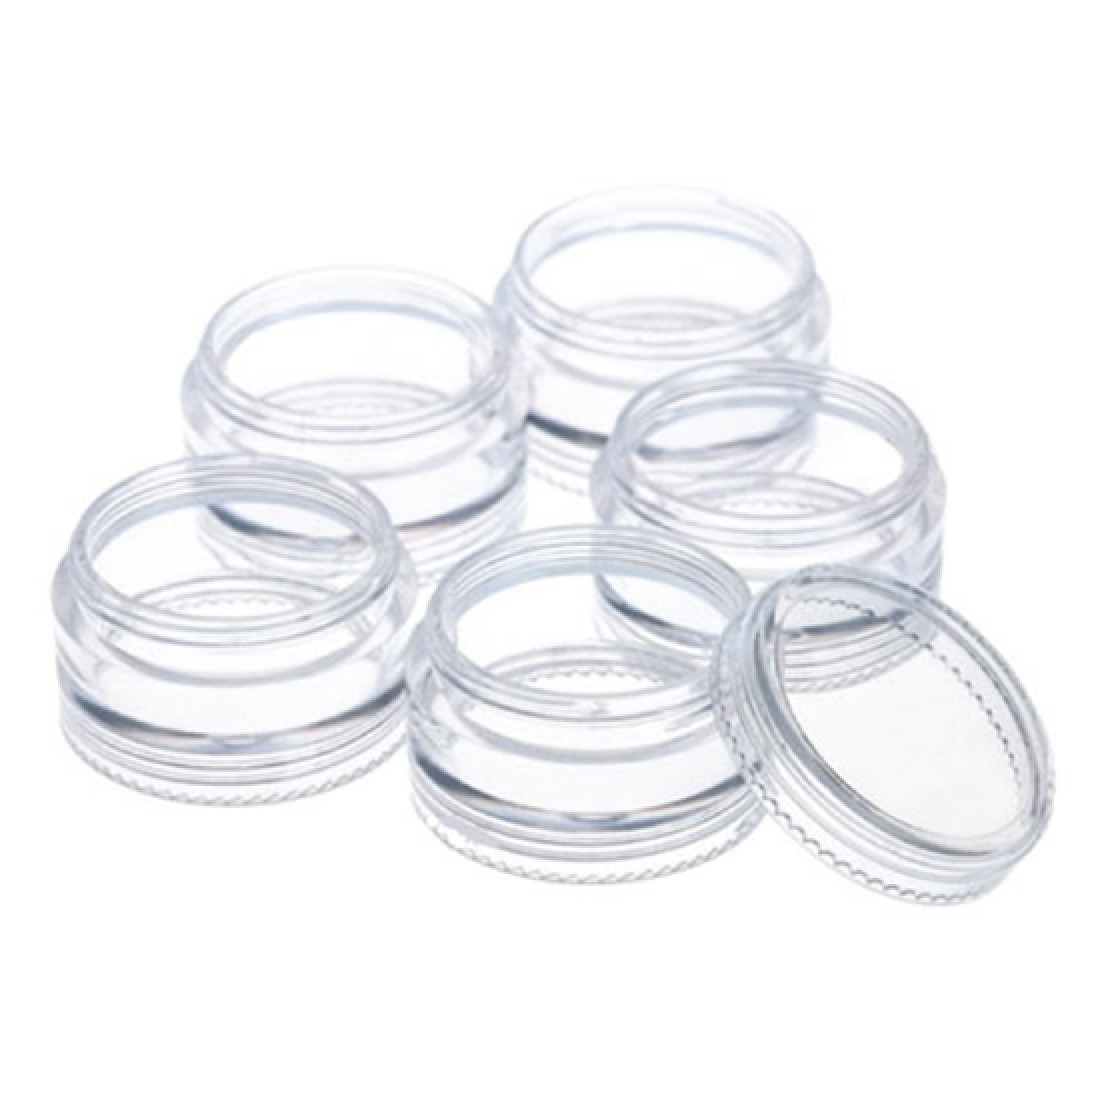 Set of nail art storage jars 12pcs. - 3280325 PROFESSIONAL TOOLS FOR EYELASH EXTENSION